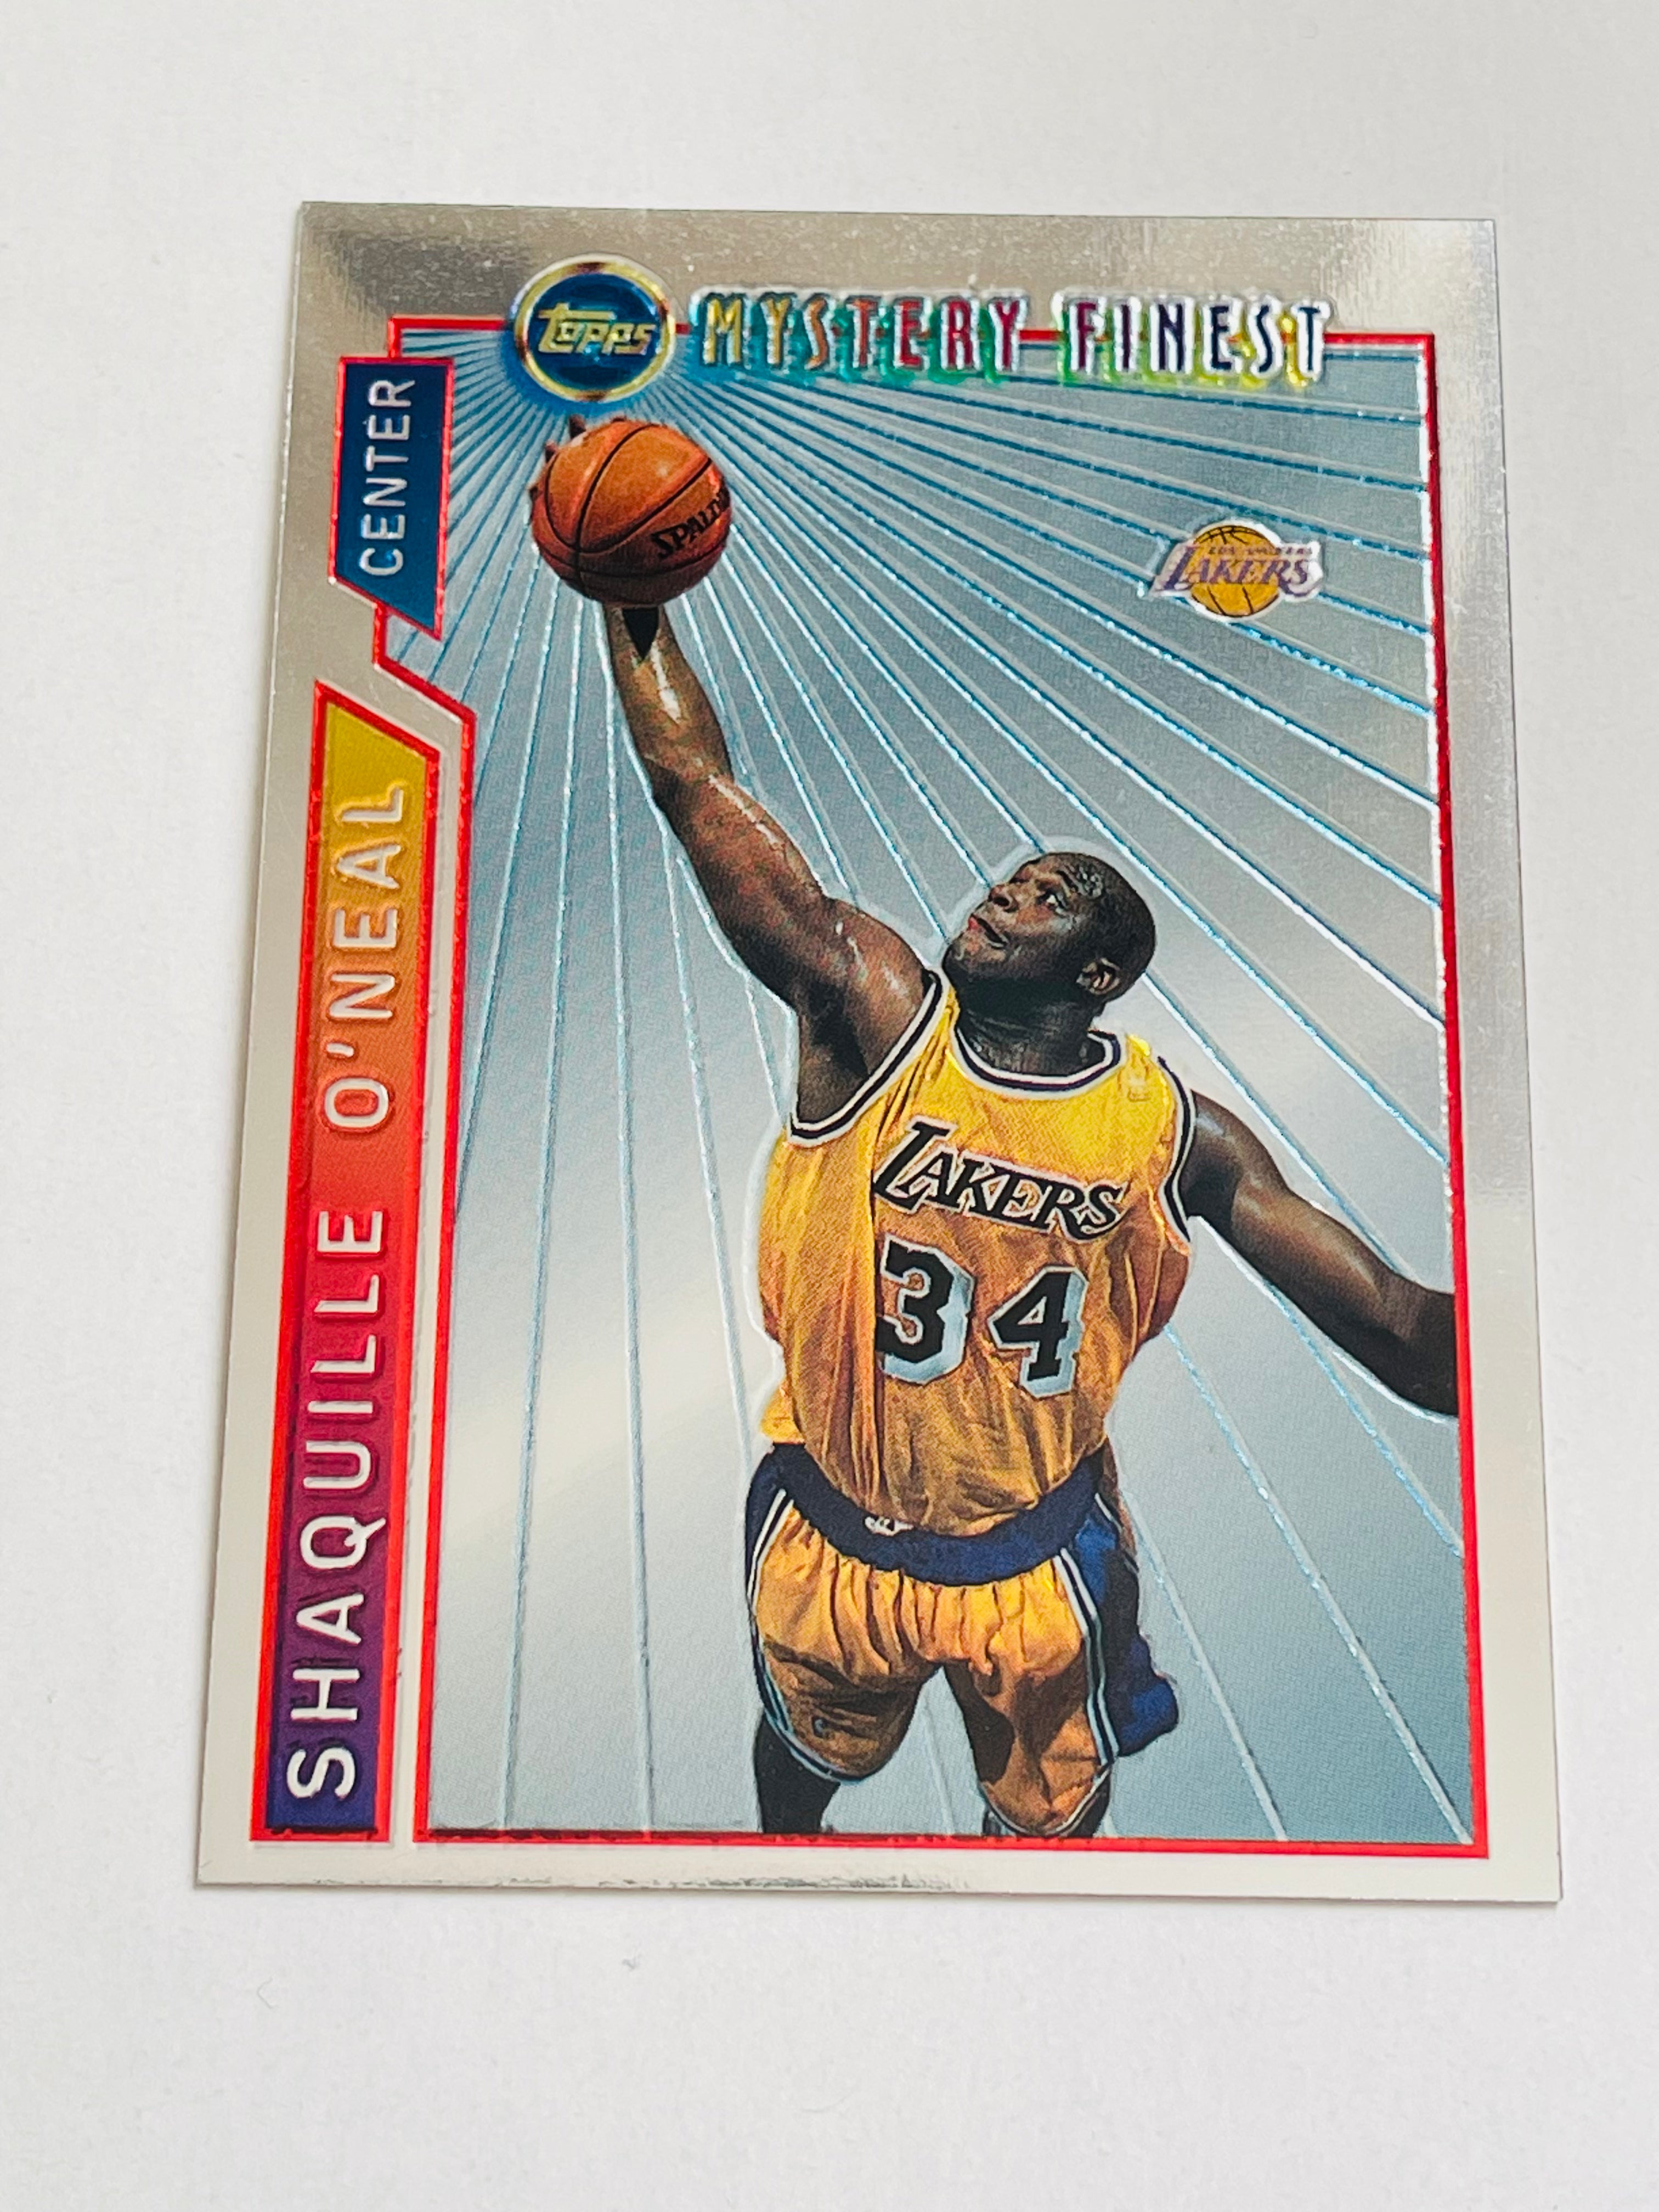 Shaq Topps Mystery finest basketball insert card 1996